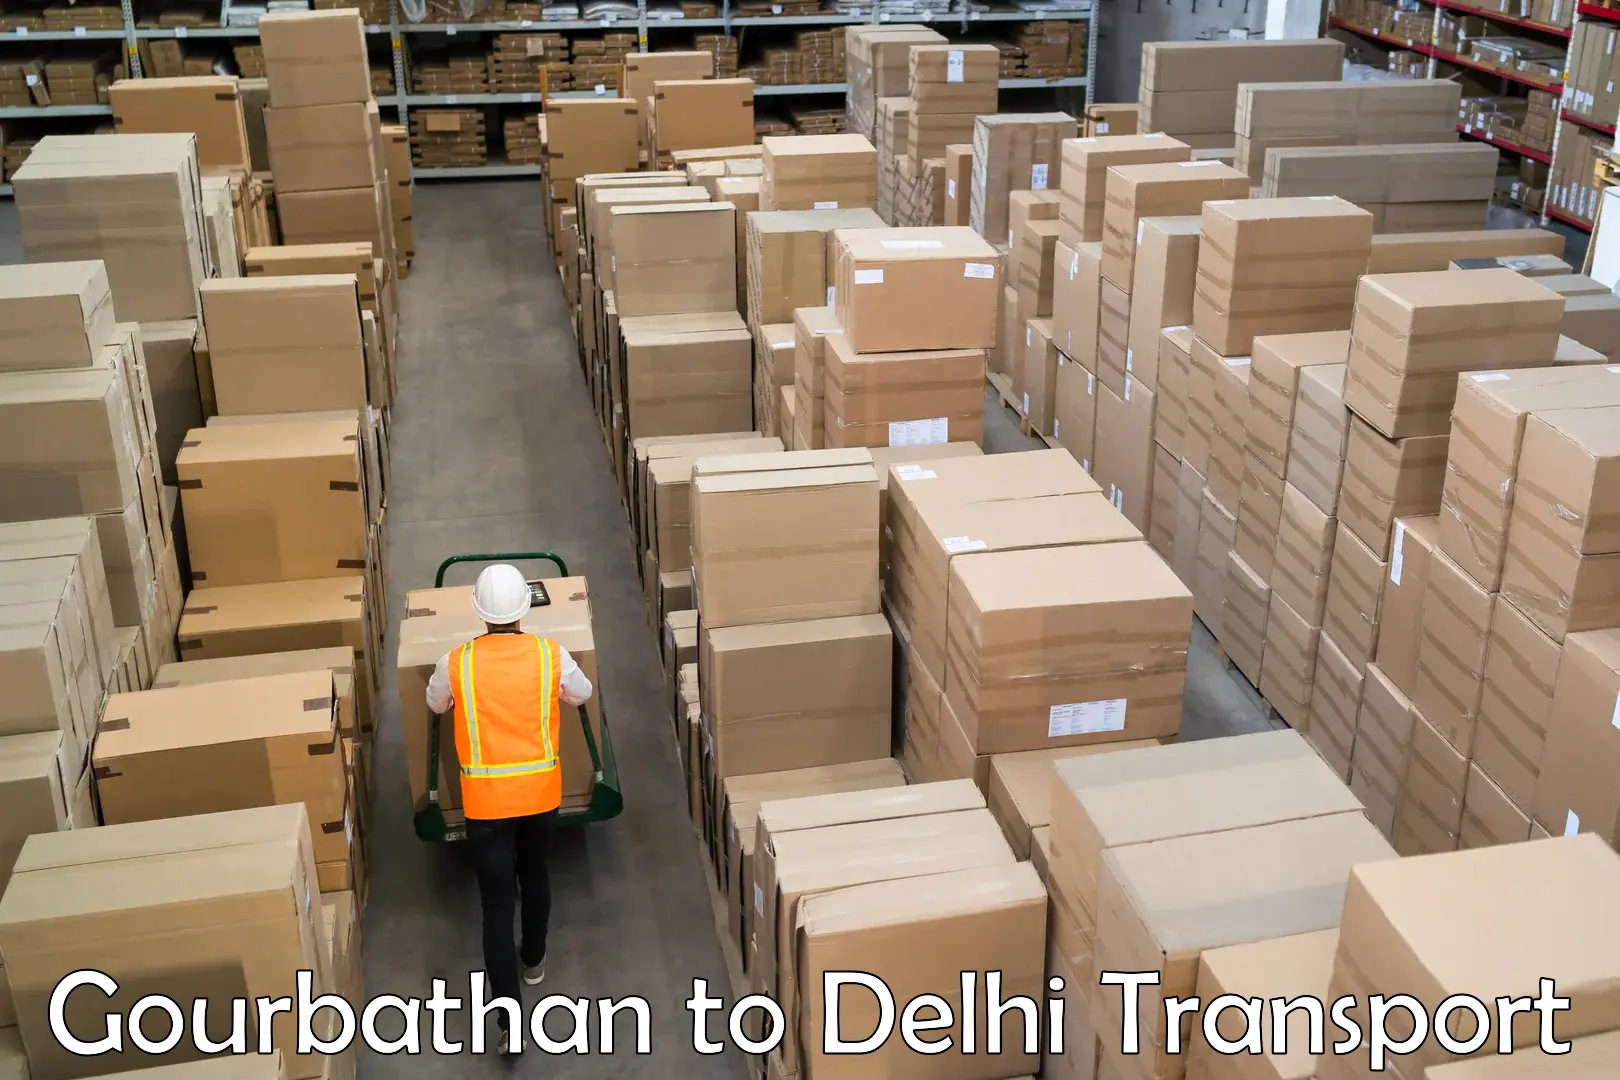 Goods delivery service Gourbathan to Delhi